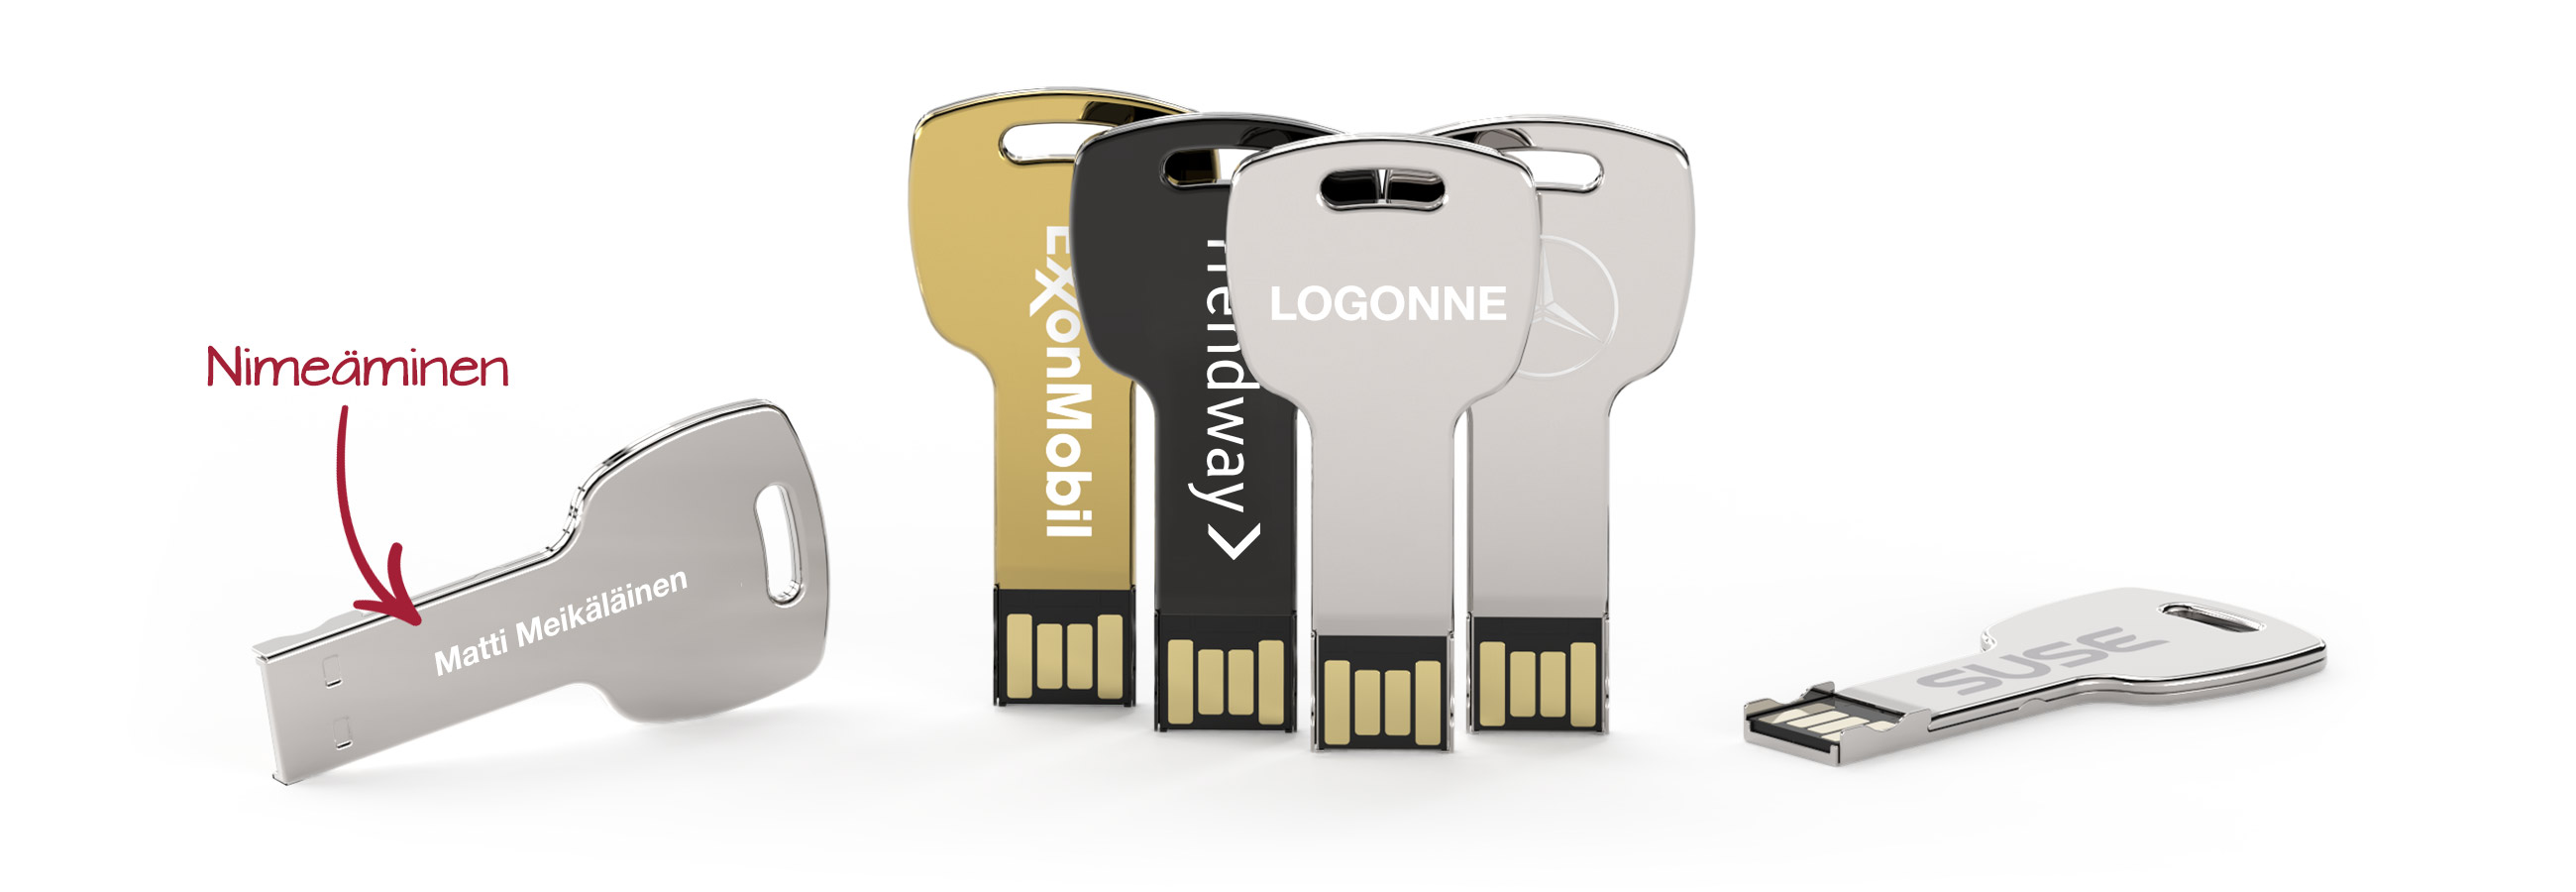 Key USB-muistitikku